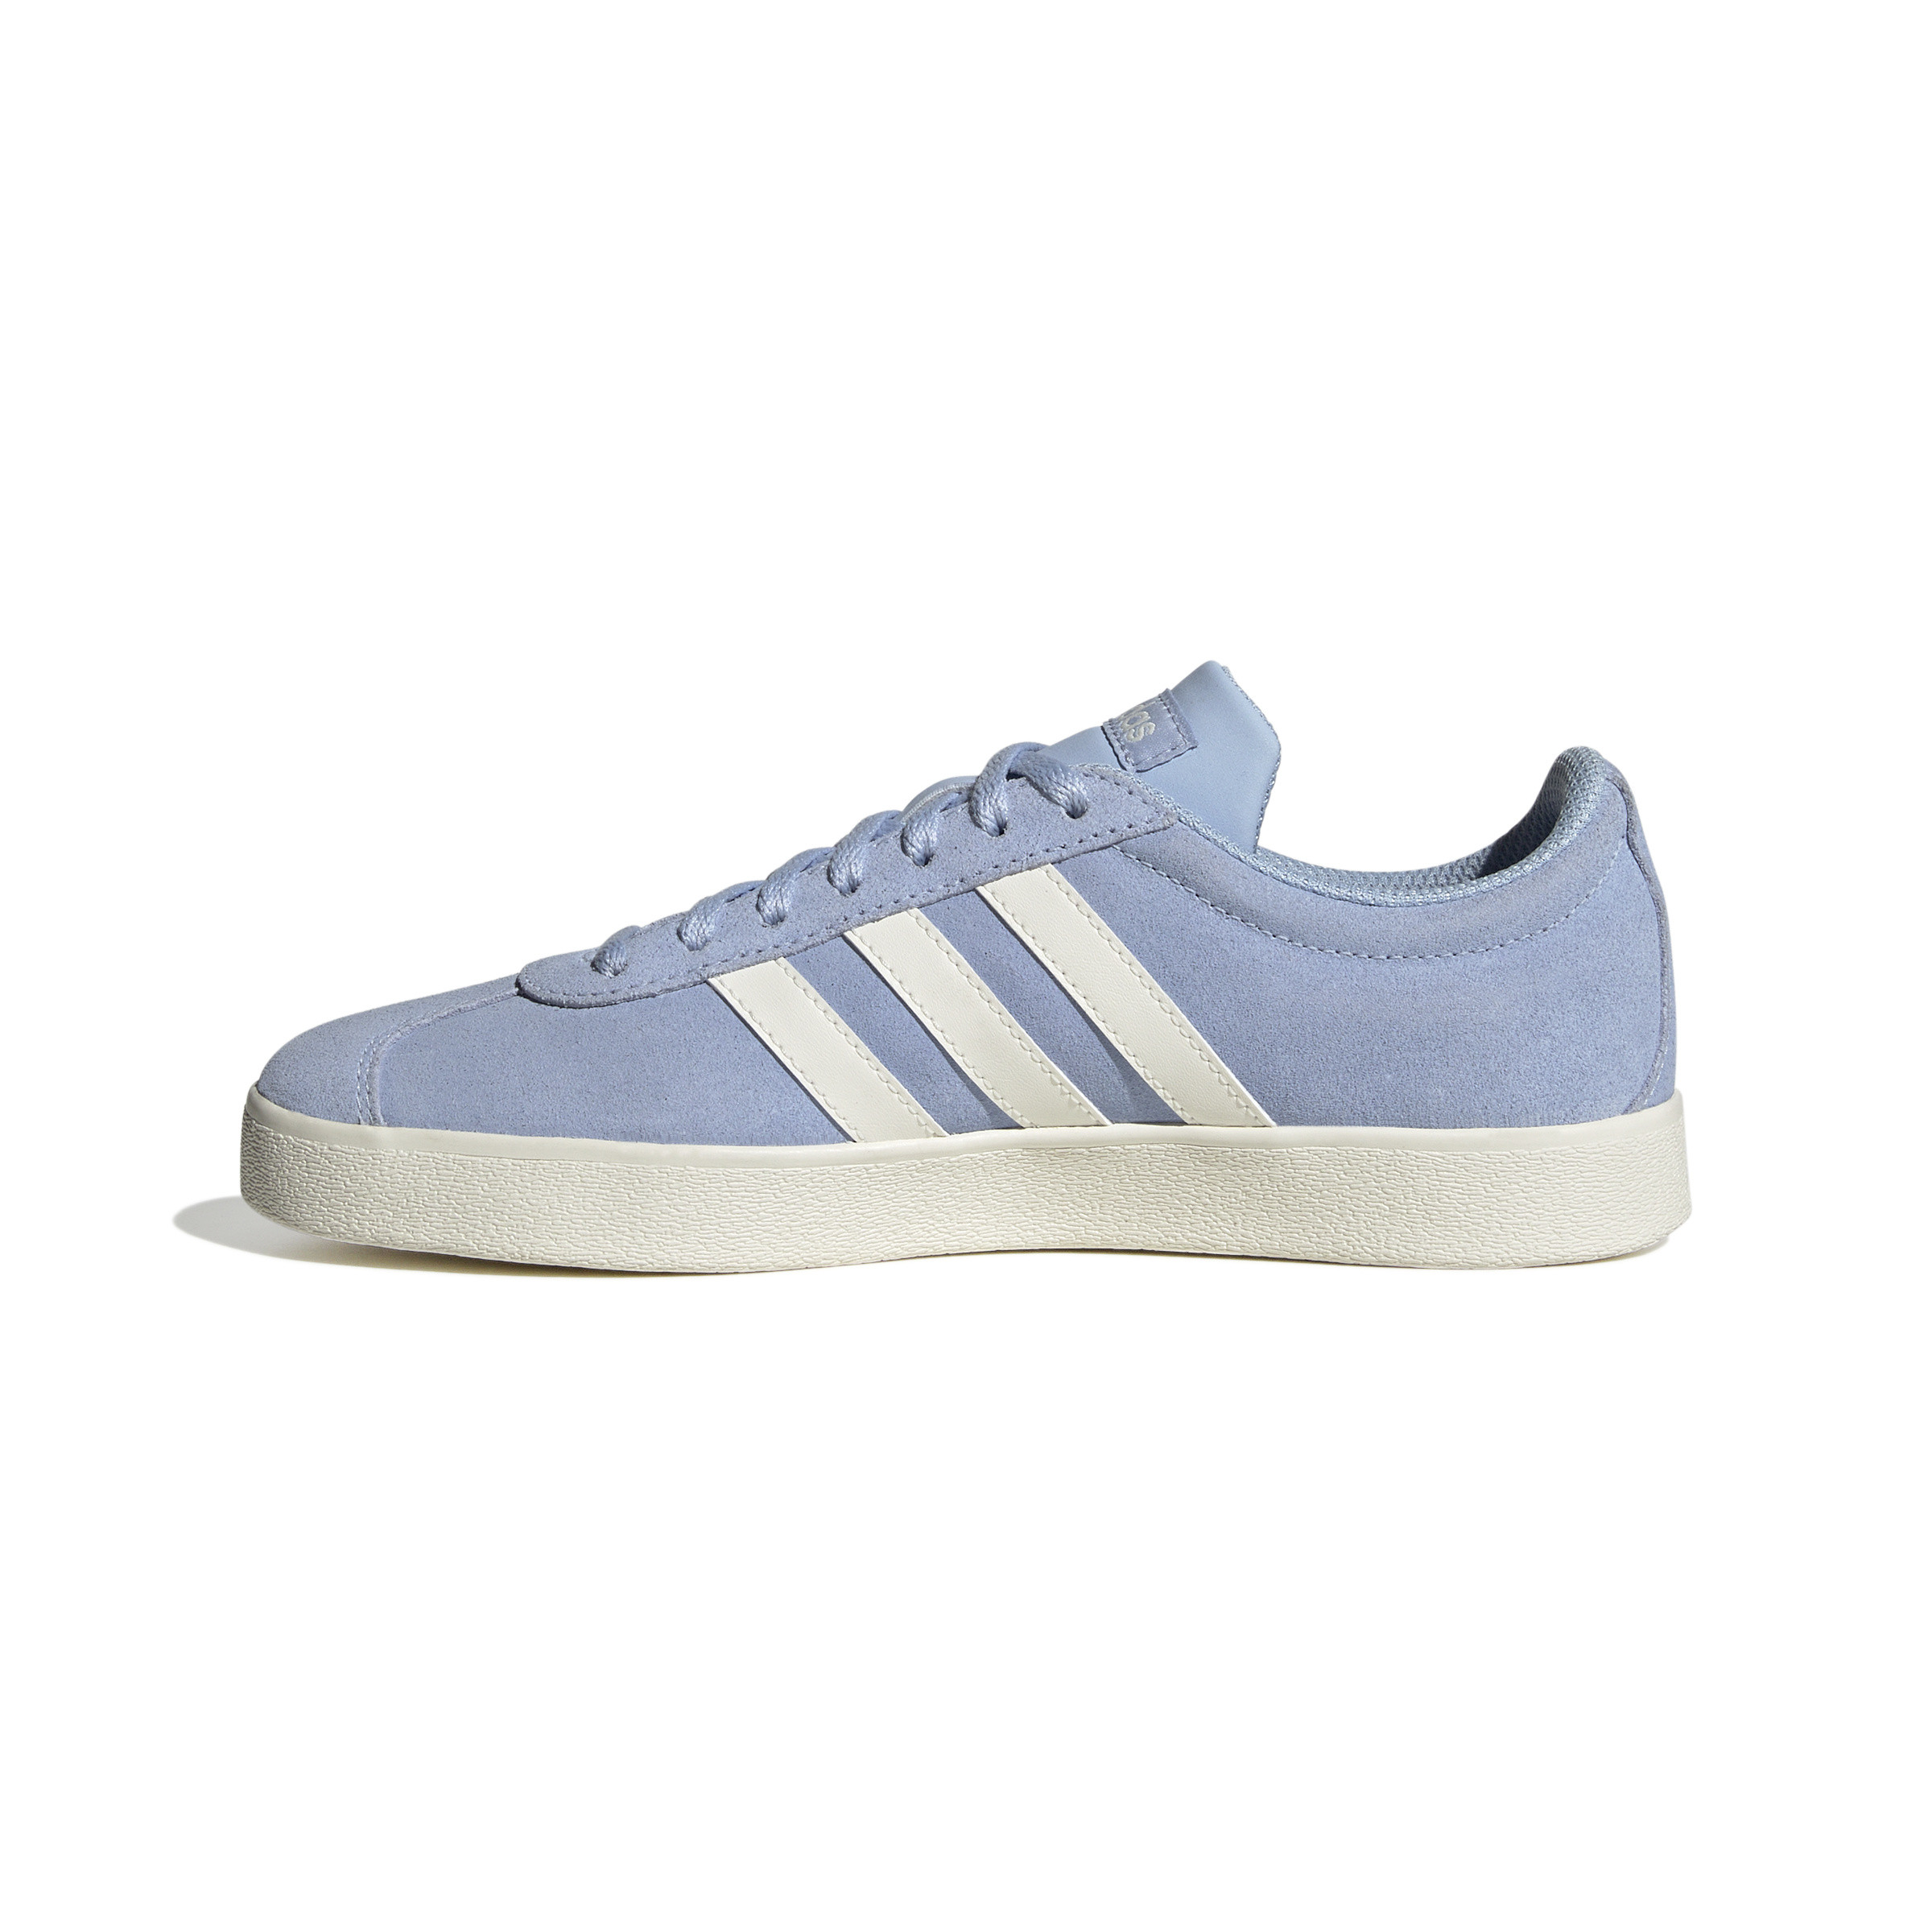 Adidas - VL Court 2.0 Suede Shoes, Light Blue, large image number 3